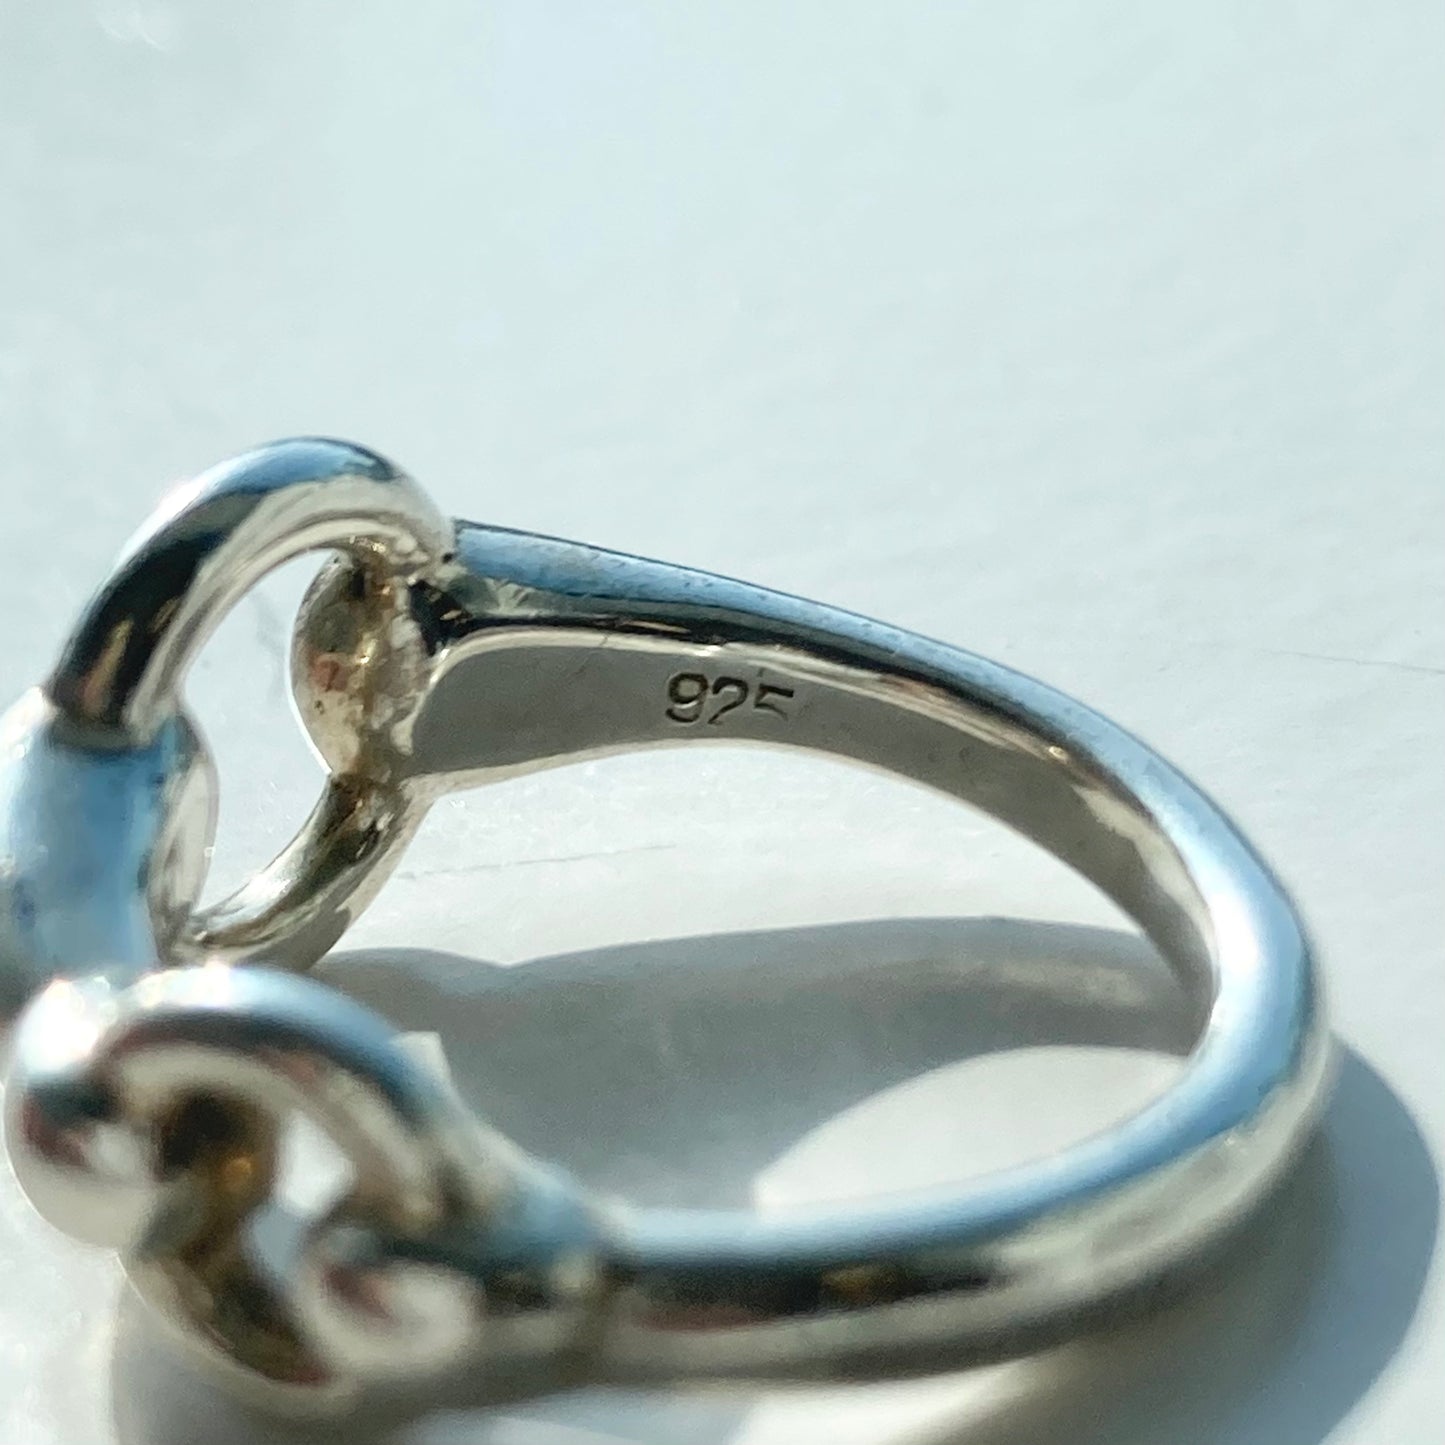 Hermès horse bit ring SV925 #9-10